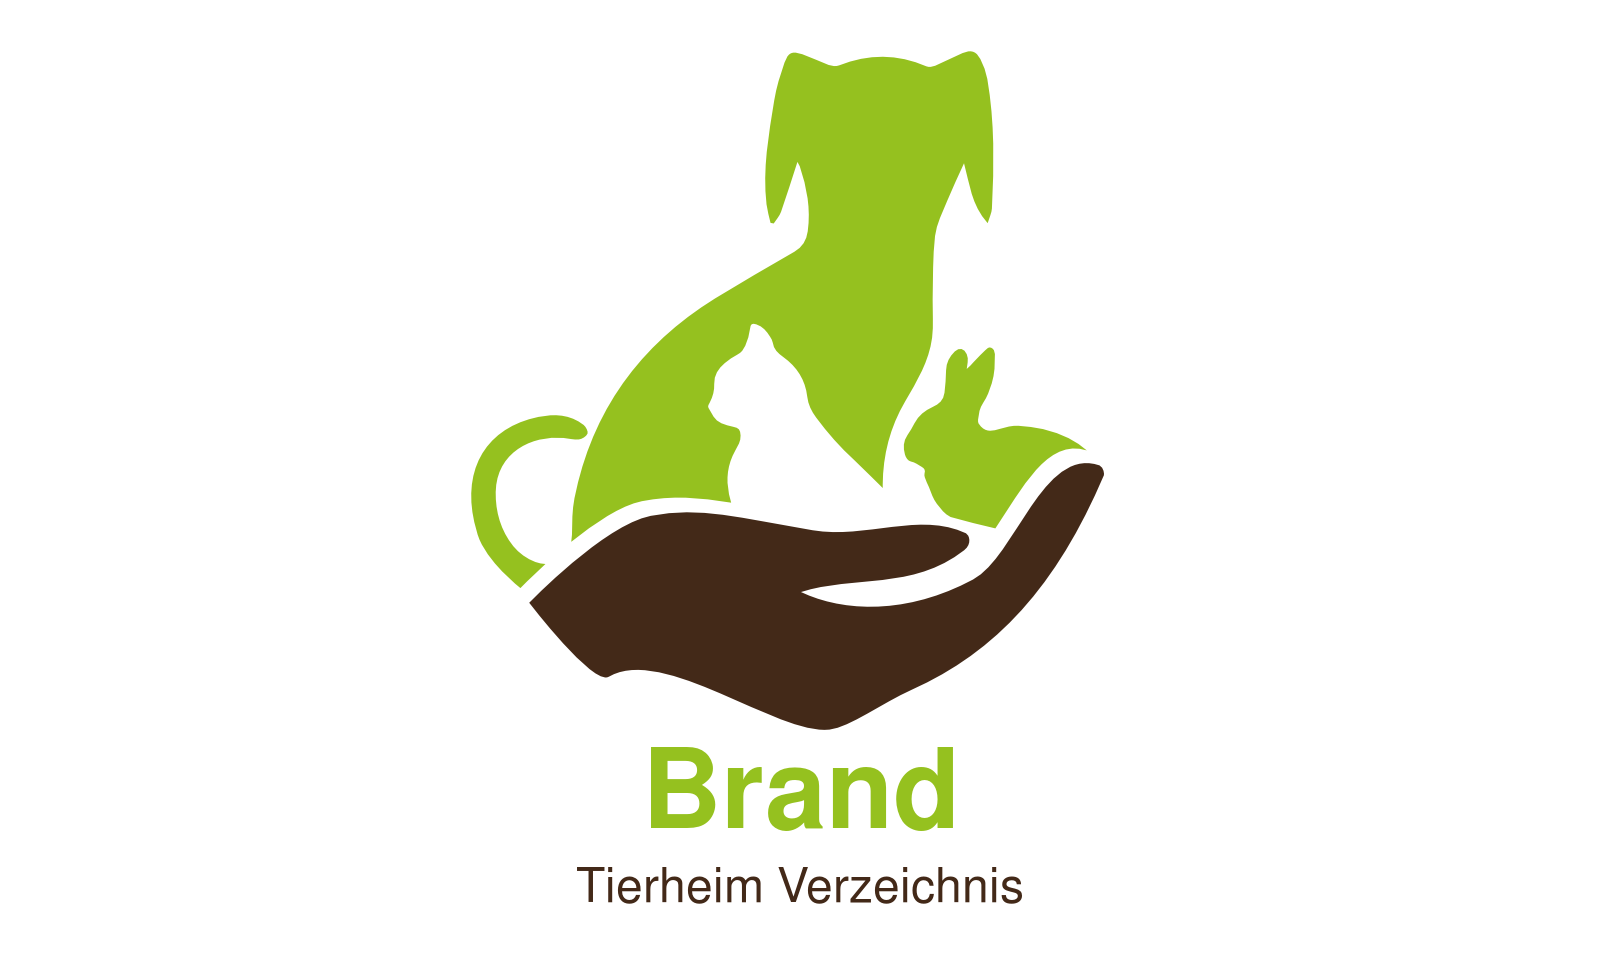 Tierheim Brand